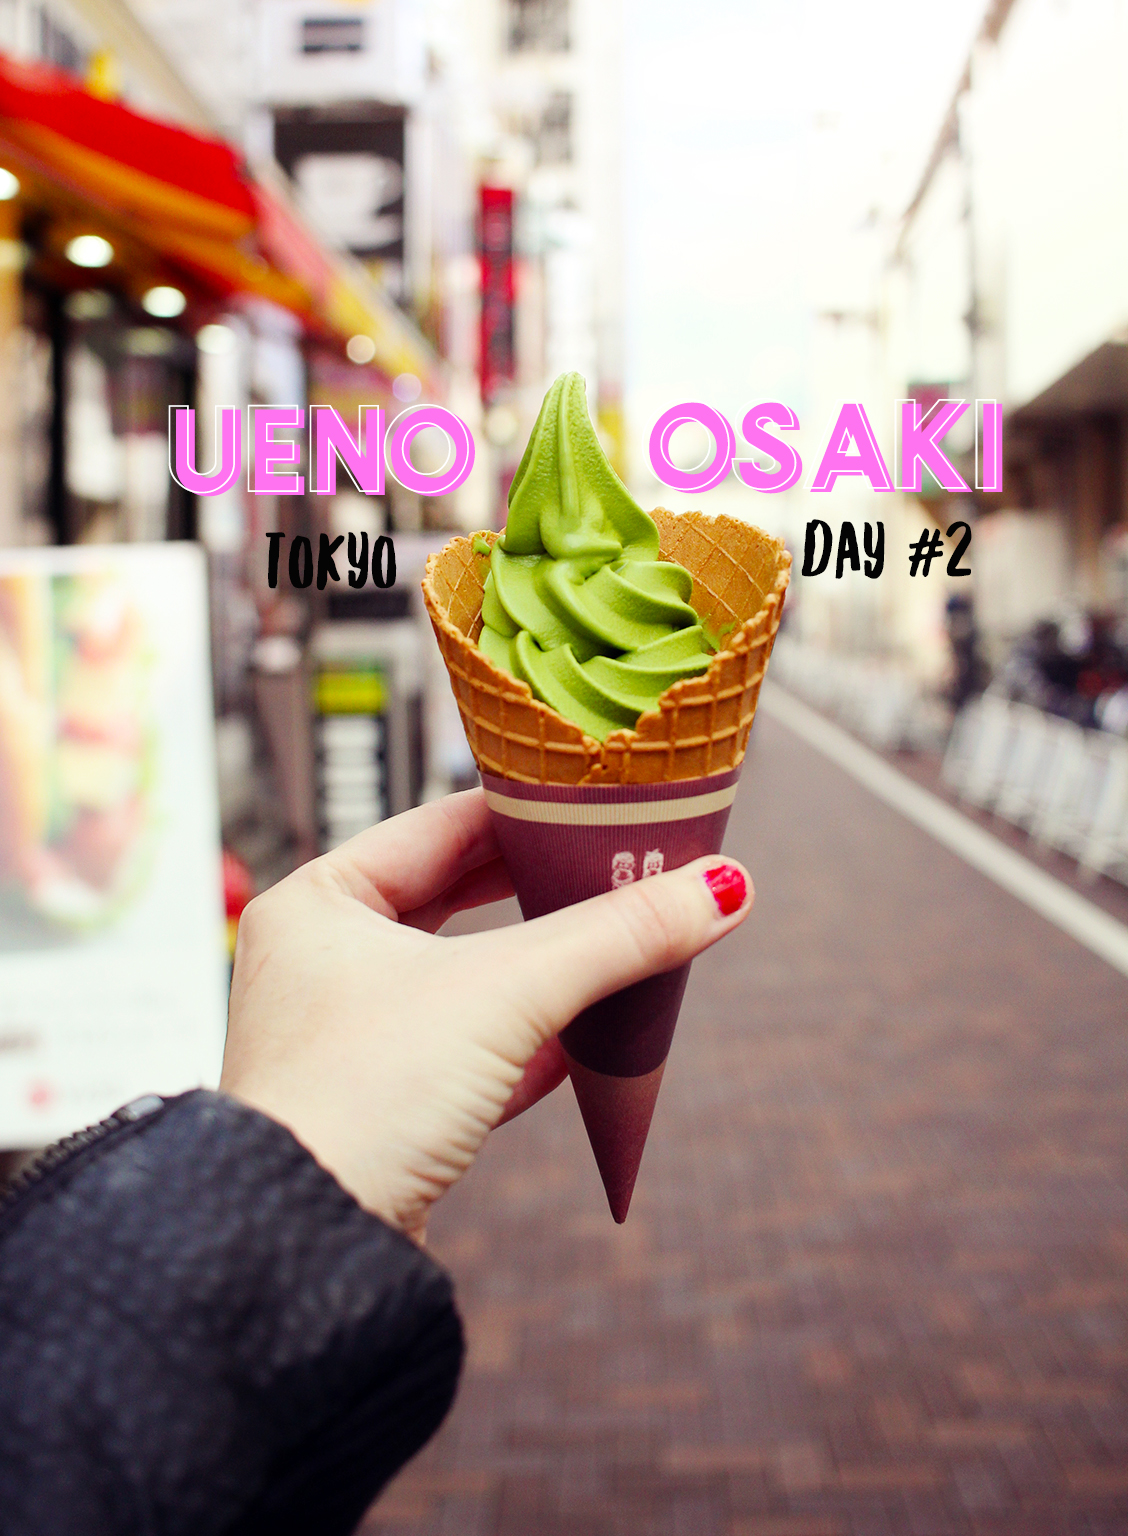 Tokyo mon carnet d’adresses #day 2 Osaki et Ueno